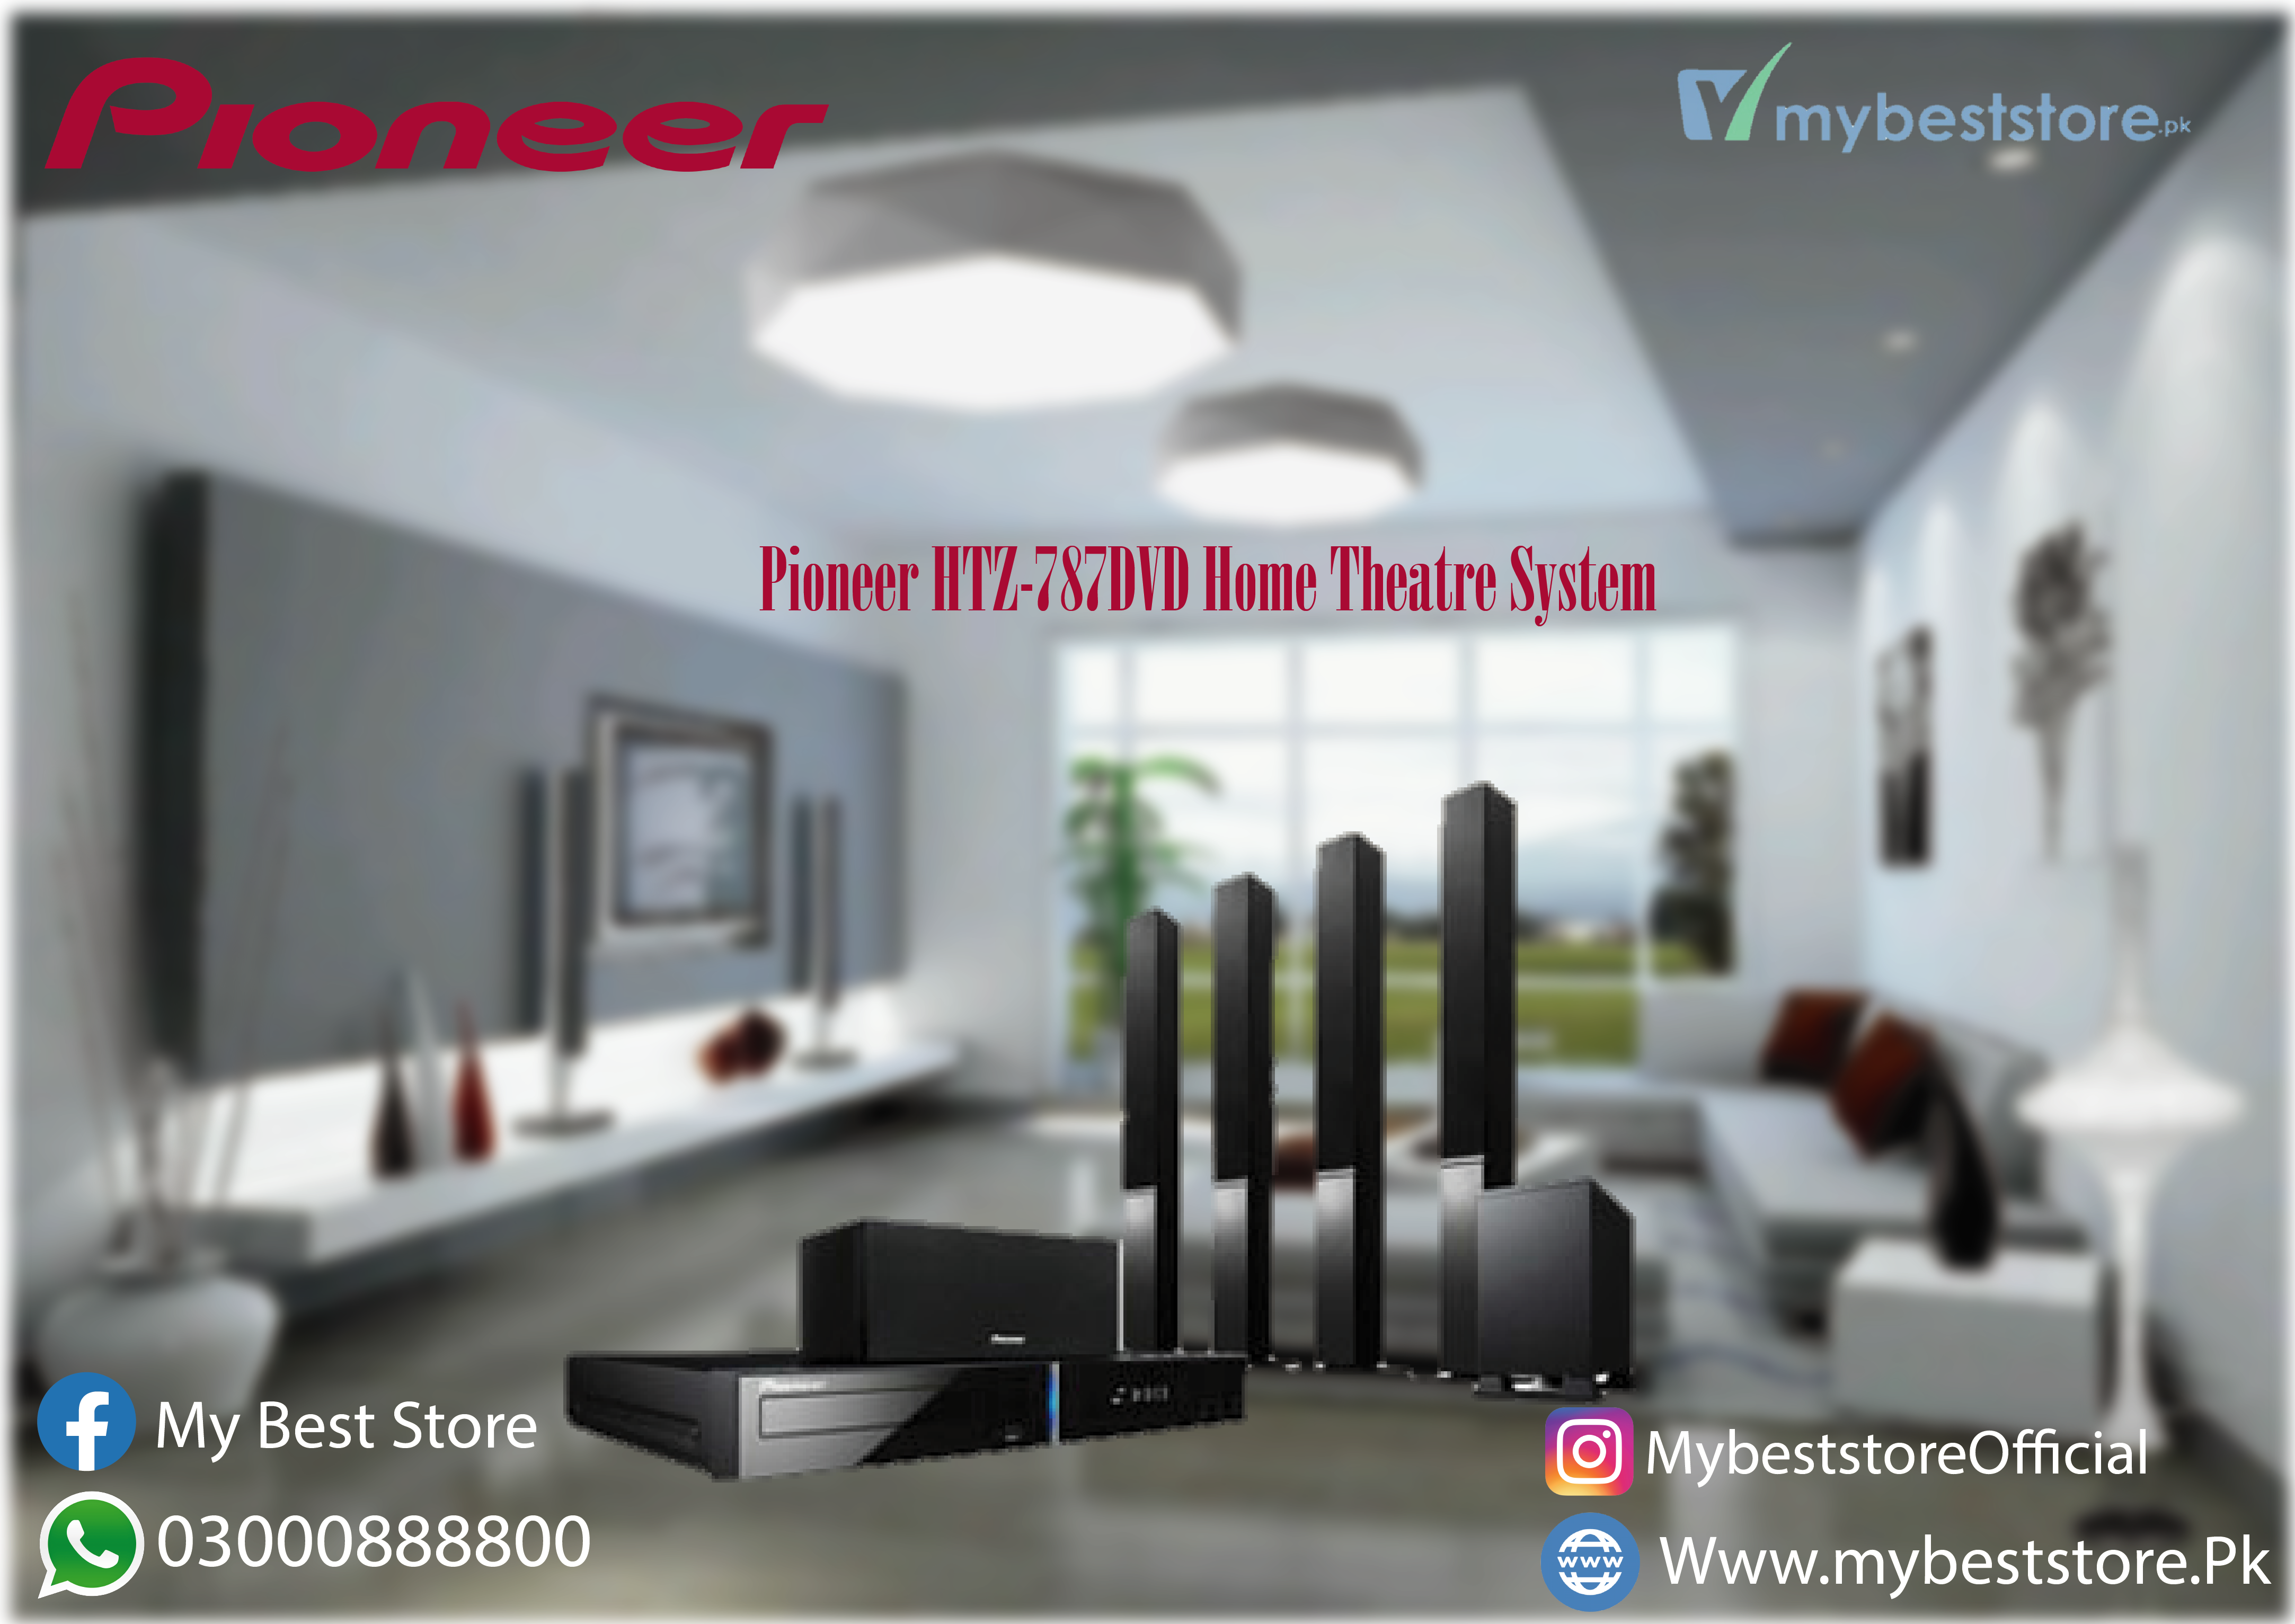 Pioneer HTZ-787DVD Home Theatre System